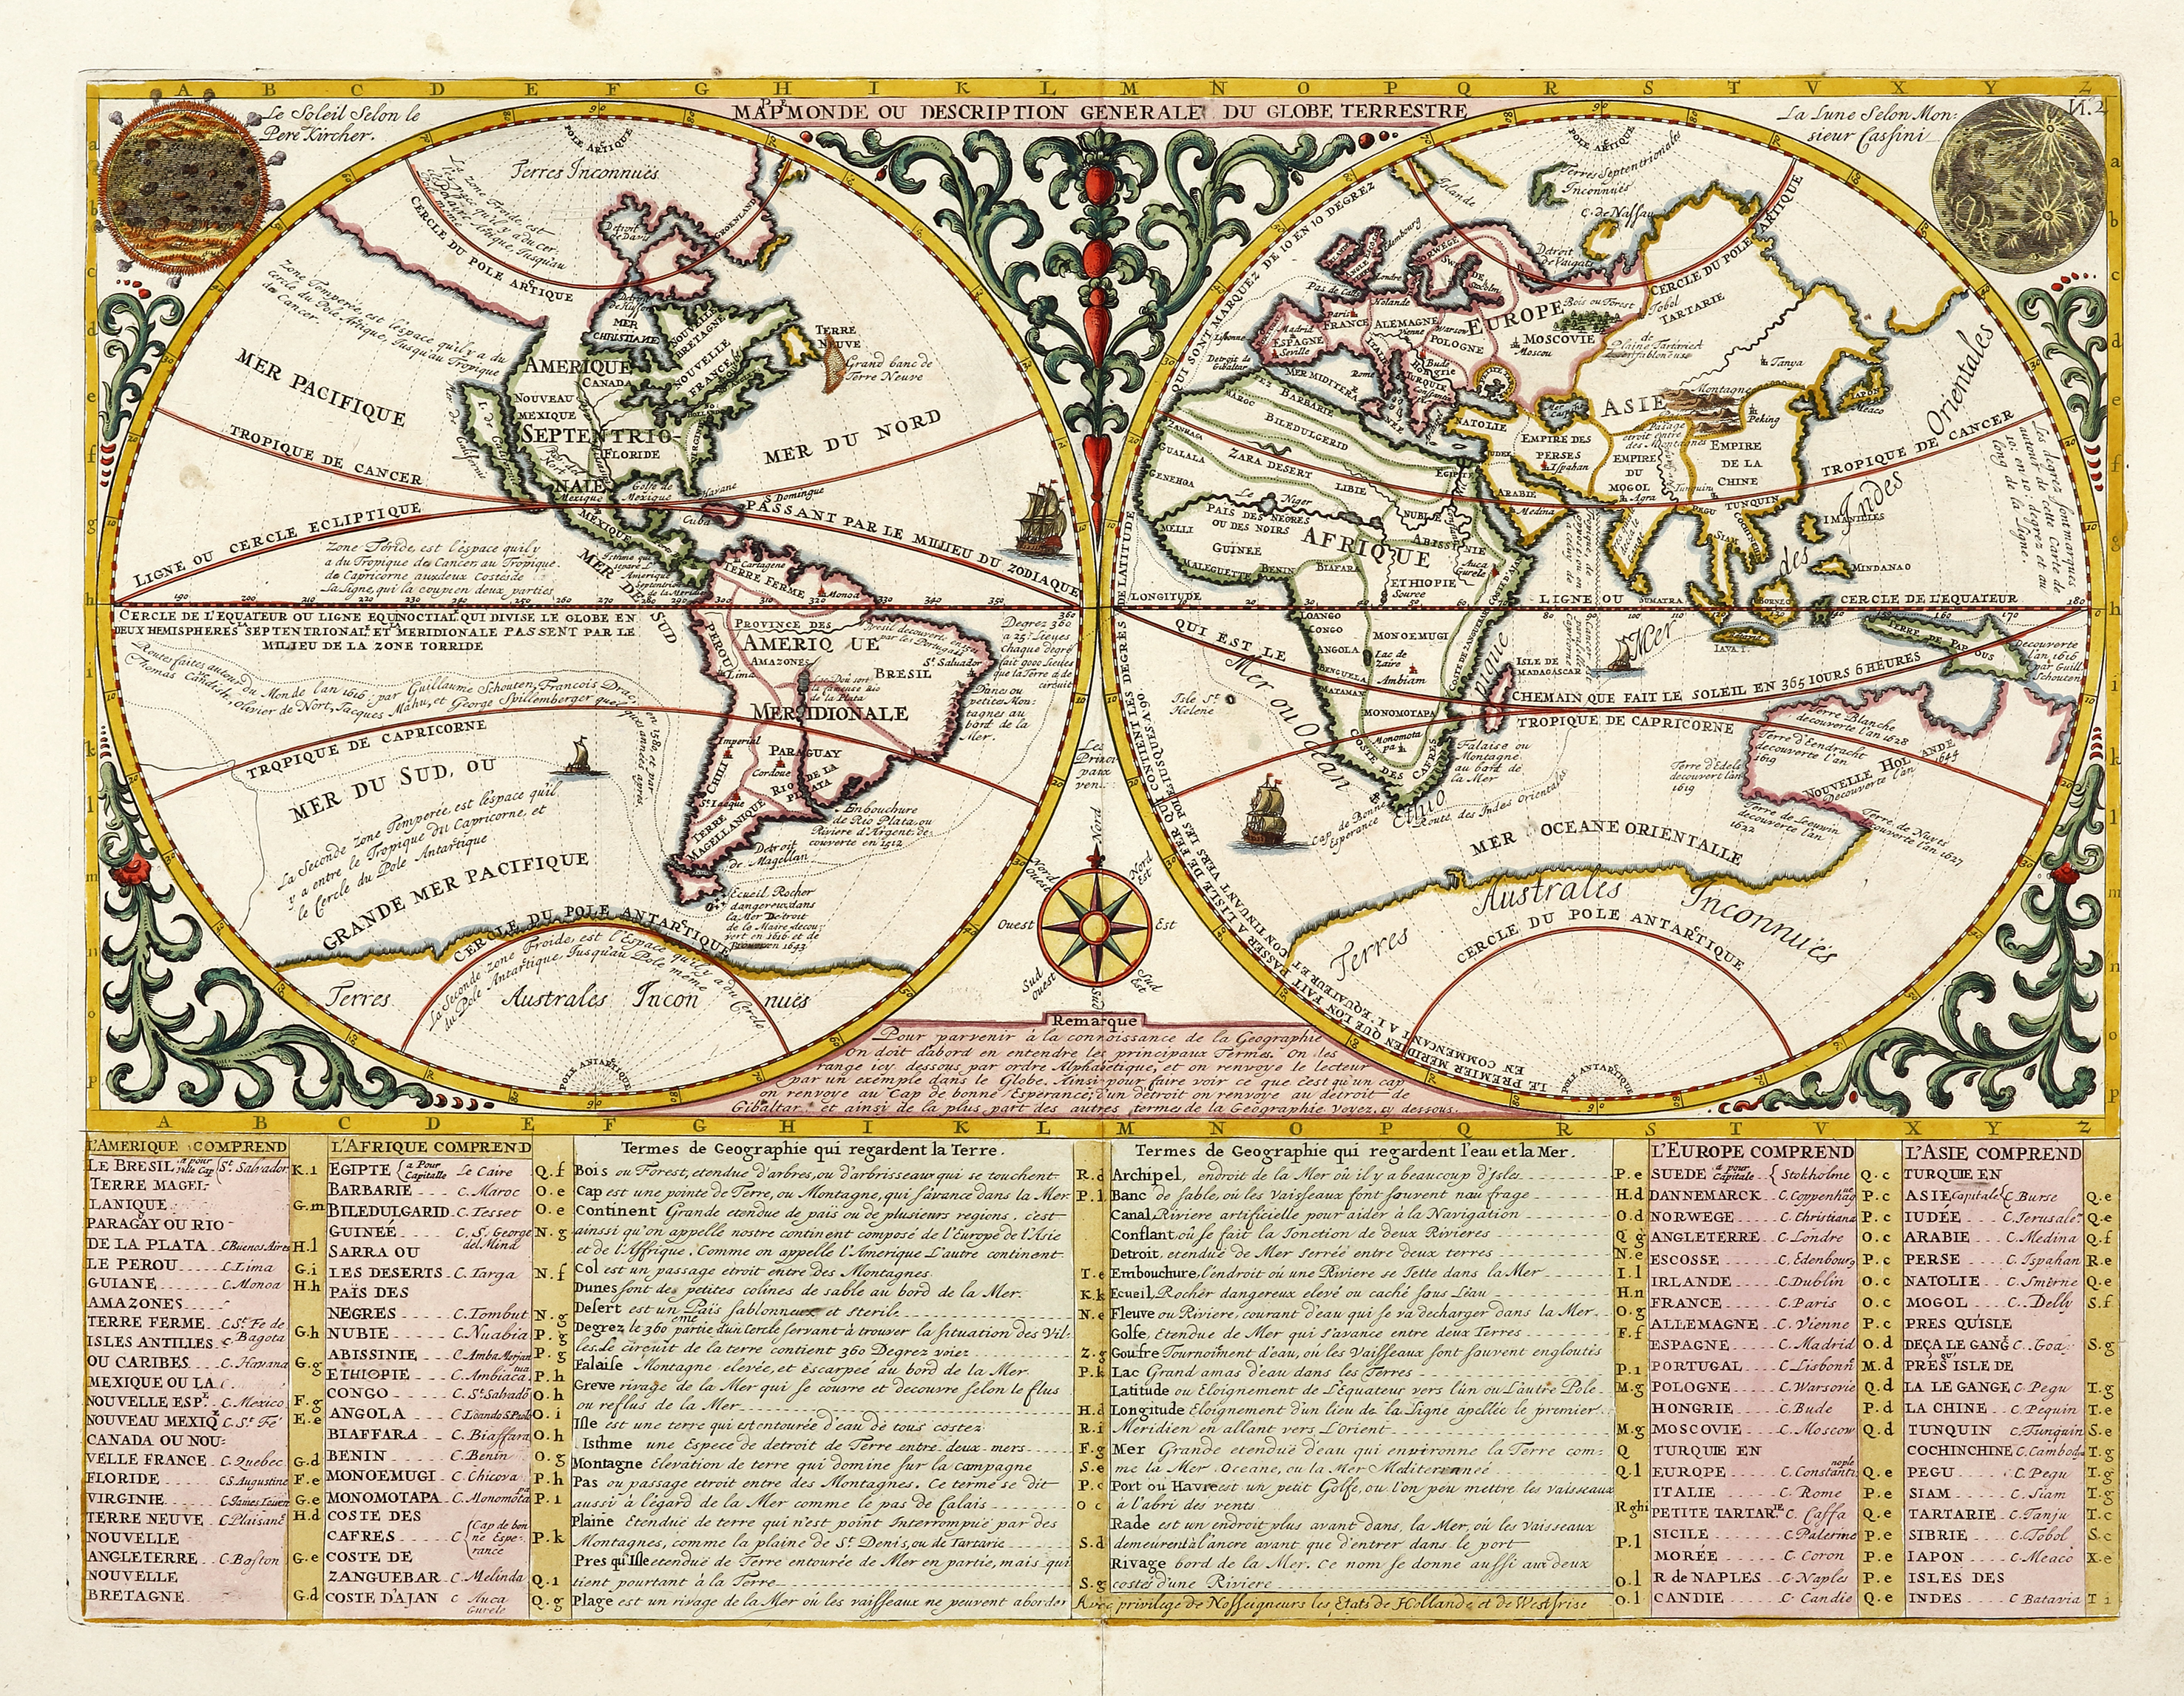 Mapmonde ou Description Generale du Globe Terrestre - Antique Map from 1719